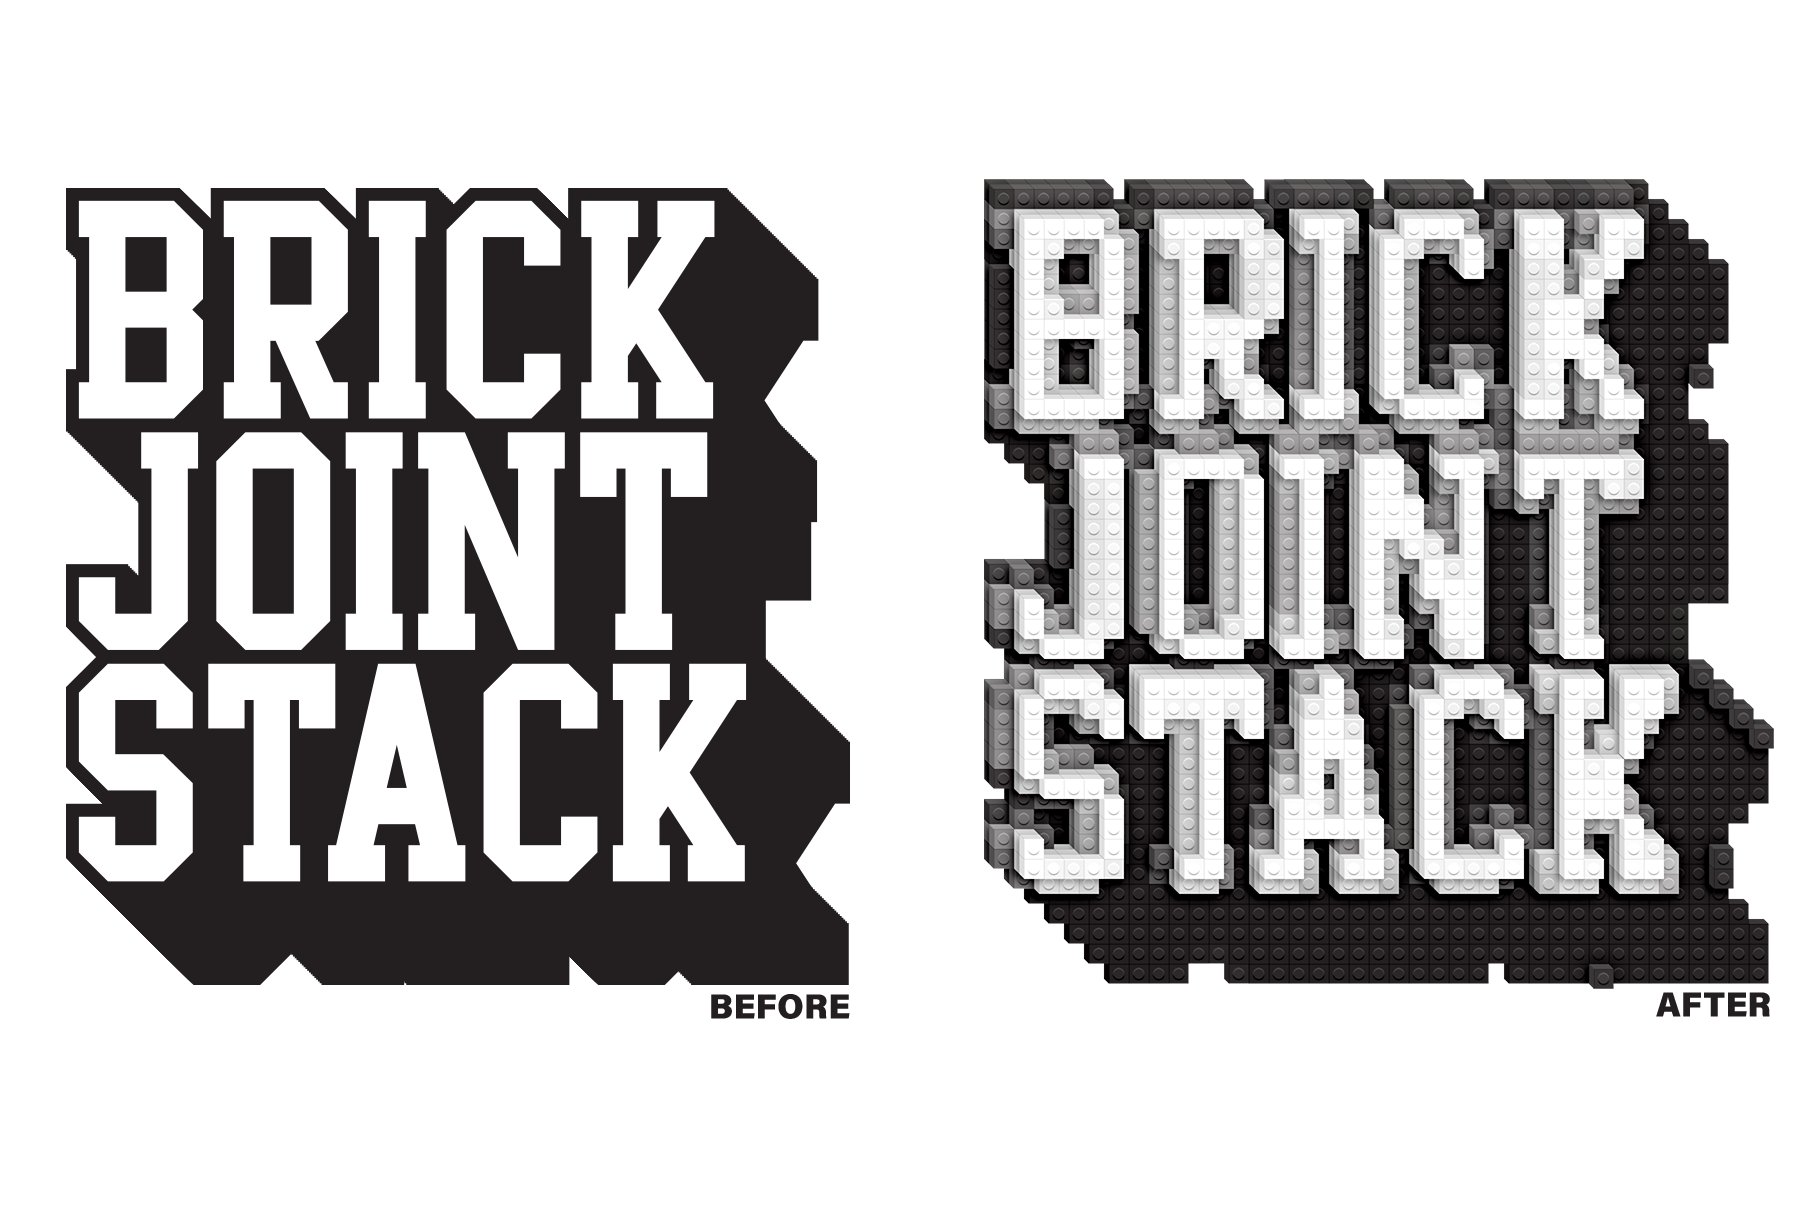 高质量复古乐高几何马赛克风格创意3D积木效果PS动作素材 BrickJoint Effect Action